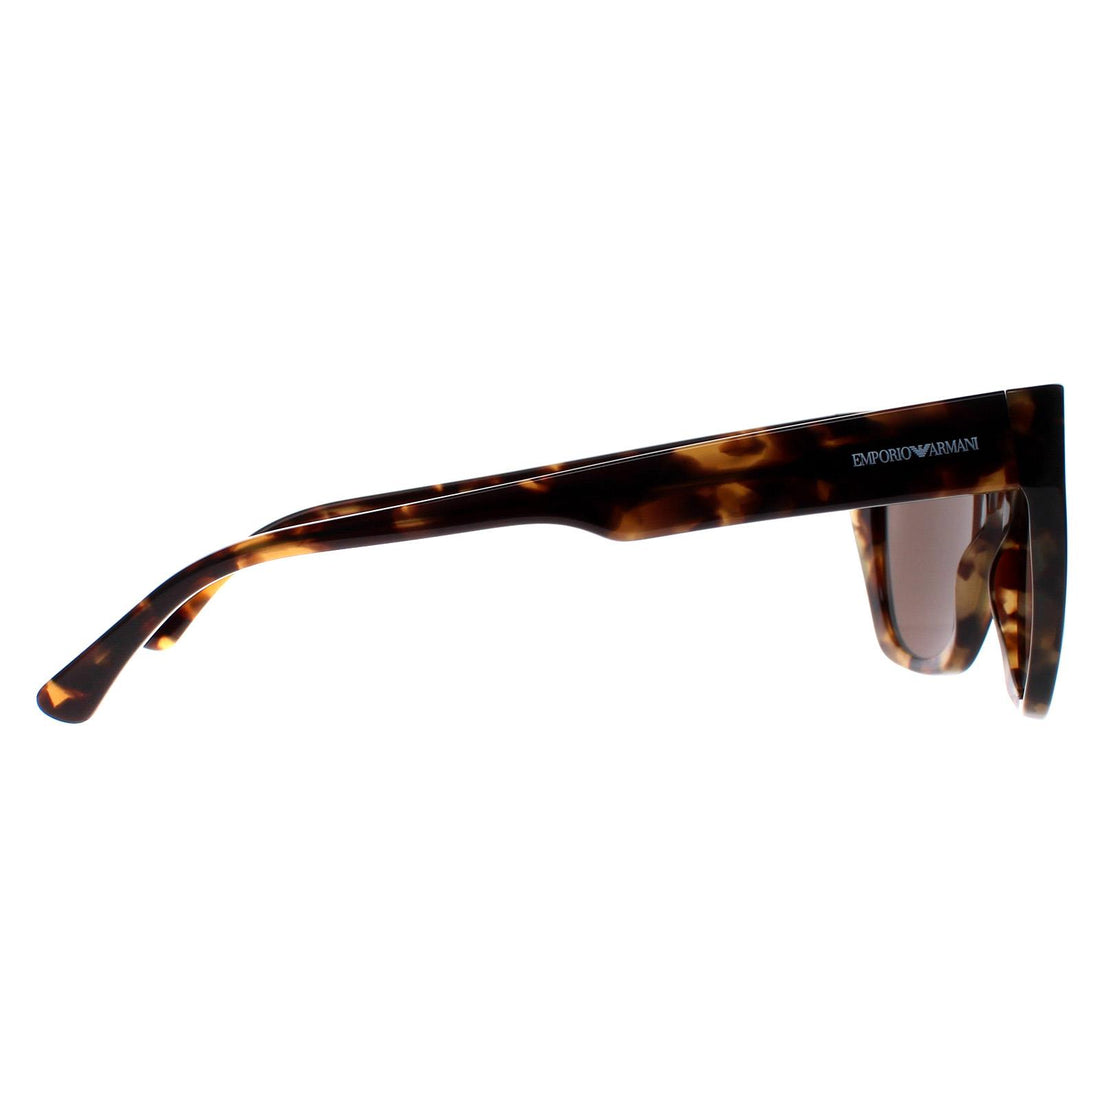 Emporio Armani Sunglasses EA4176 502573 Shiny Brown Havana Brown